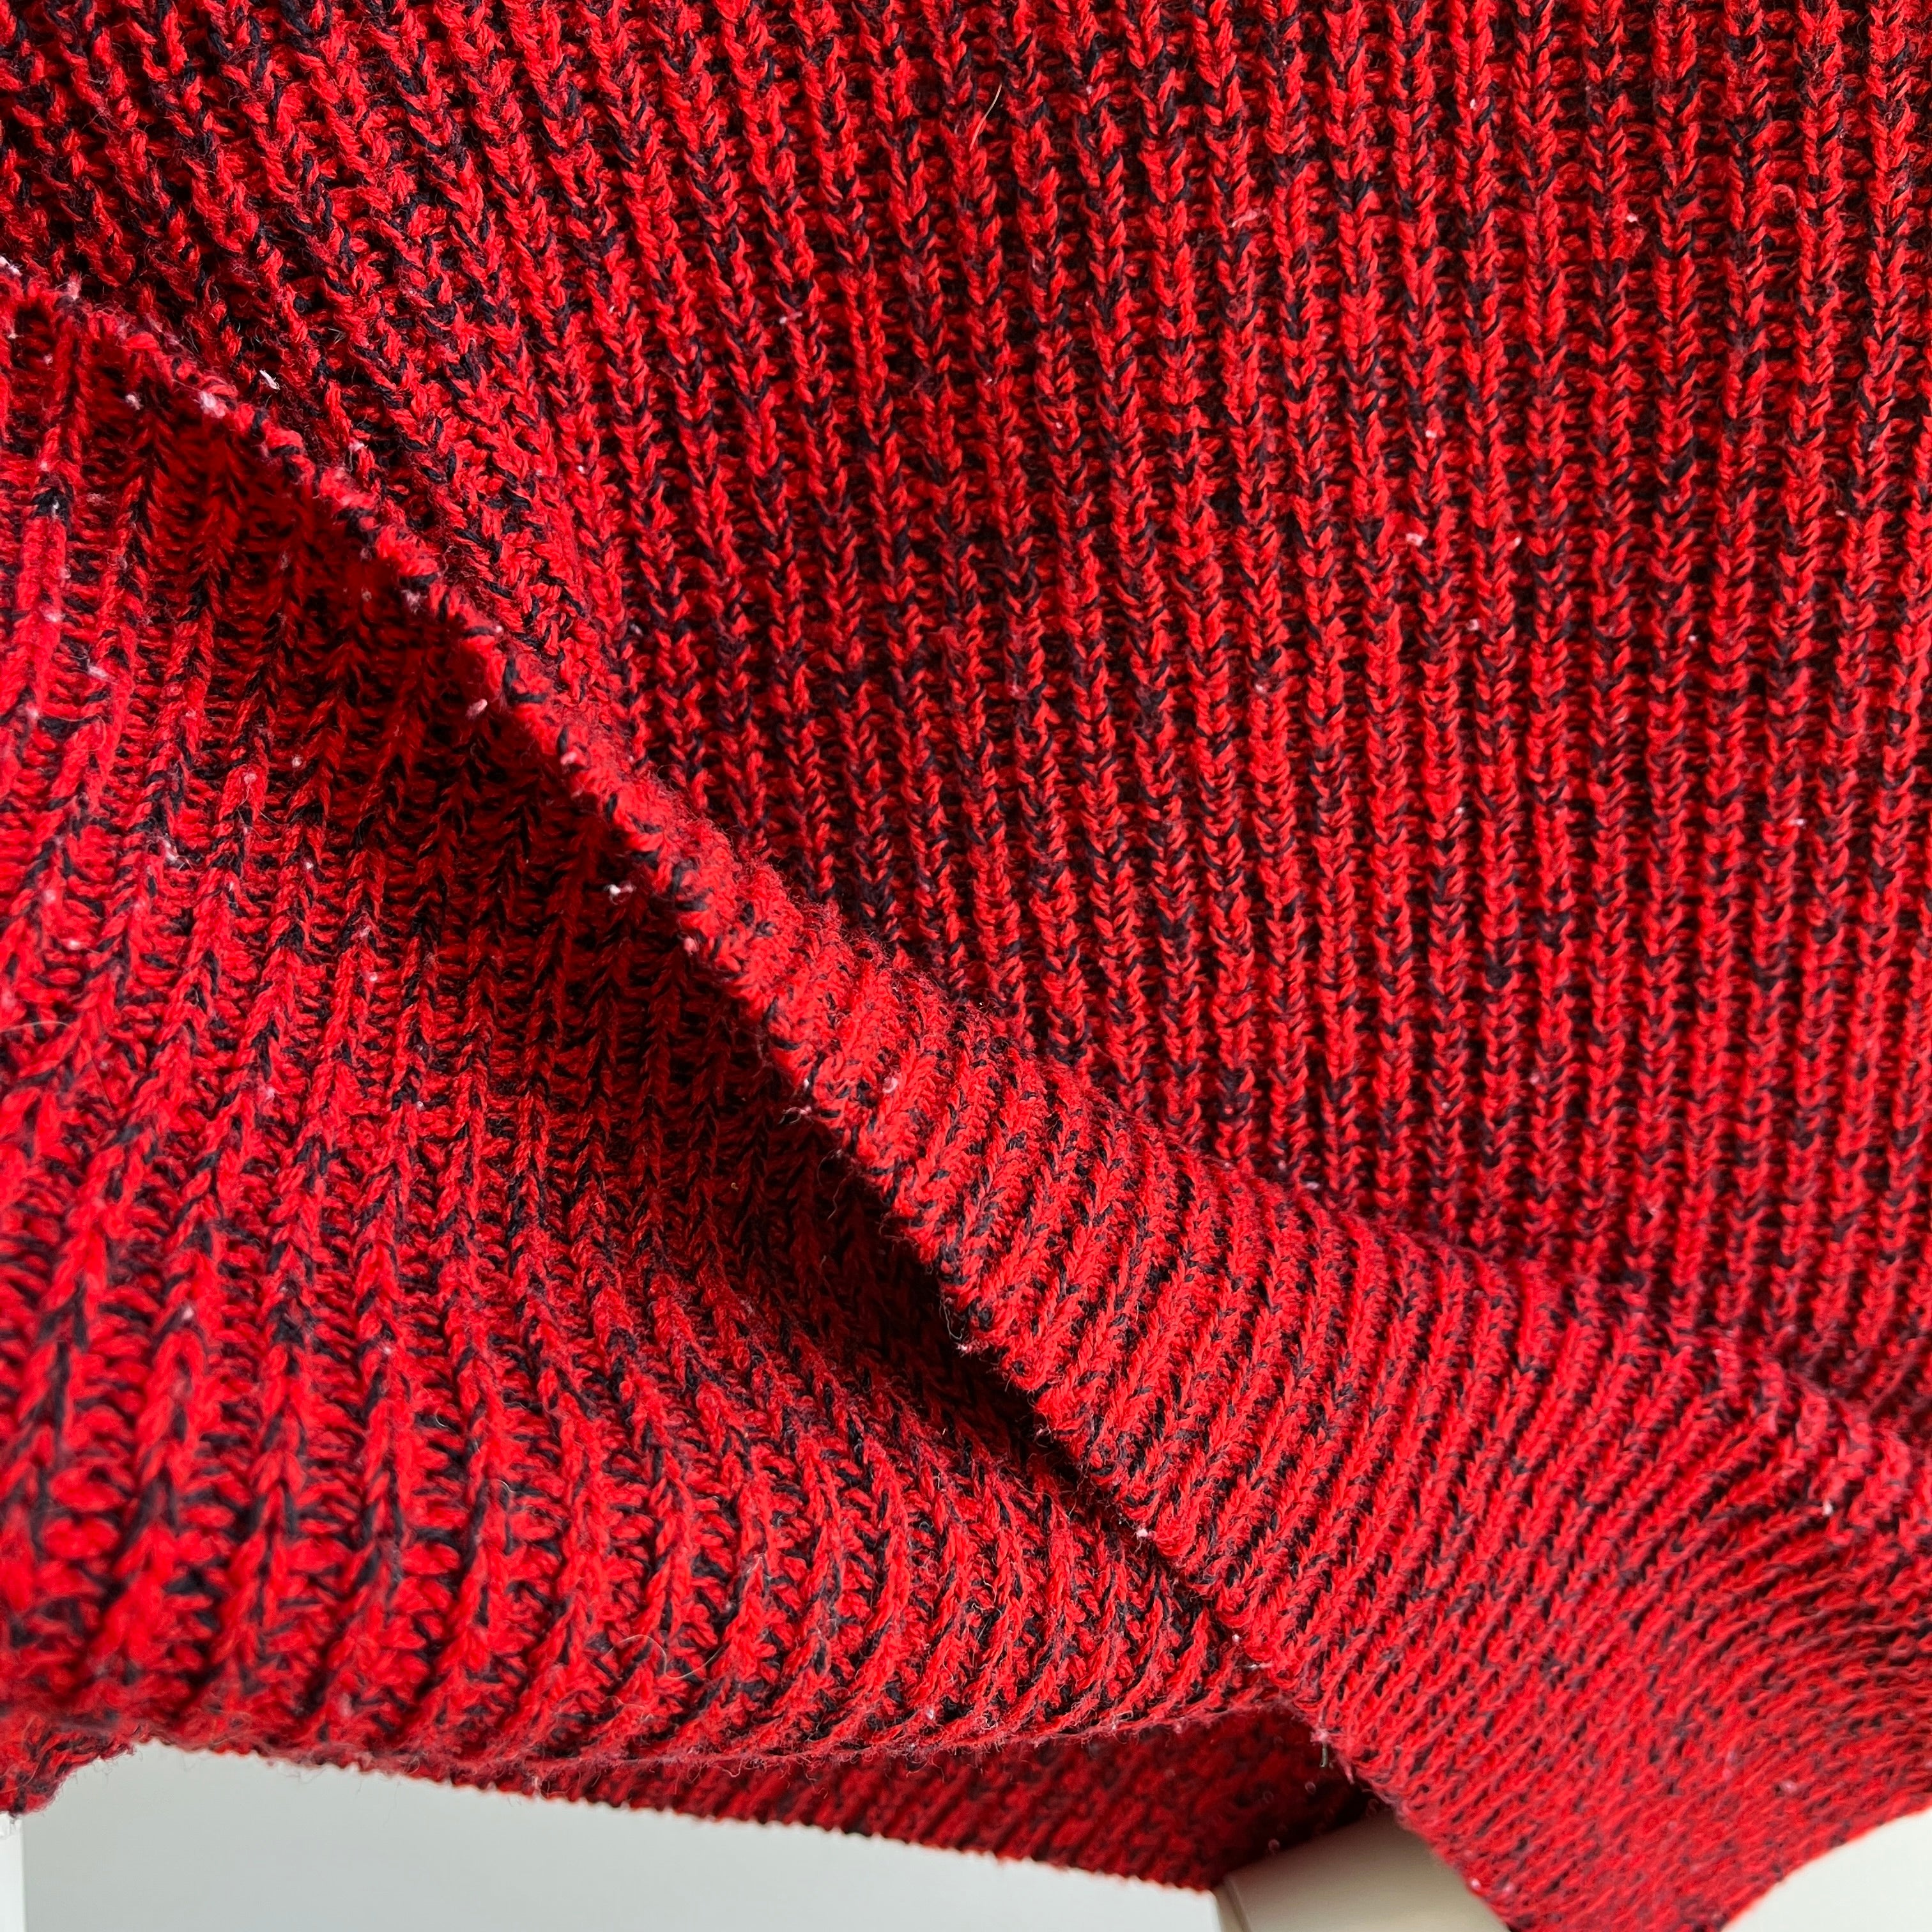 1980/90s St. John's Bay Red and Black Ribbed Raglan Sweater